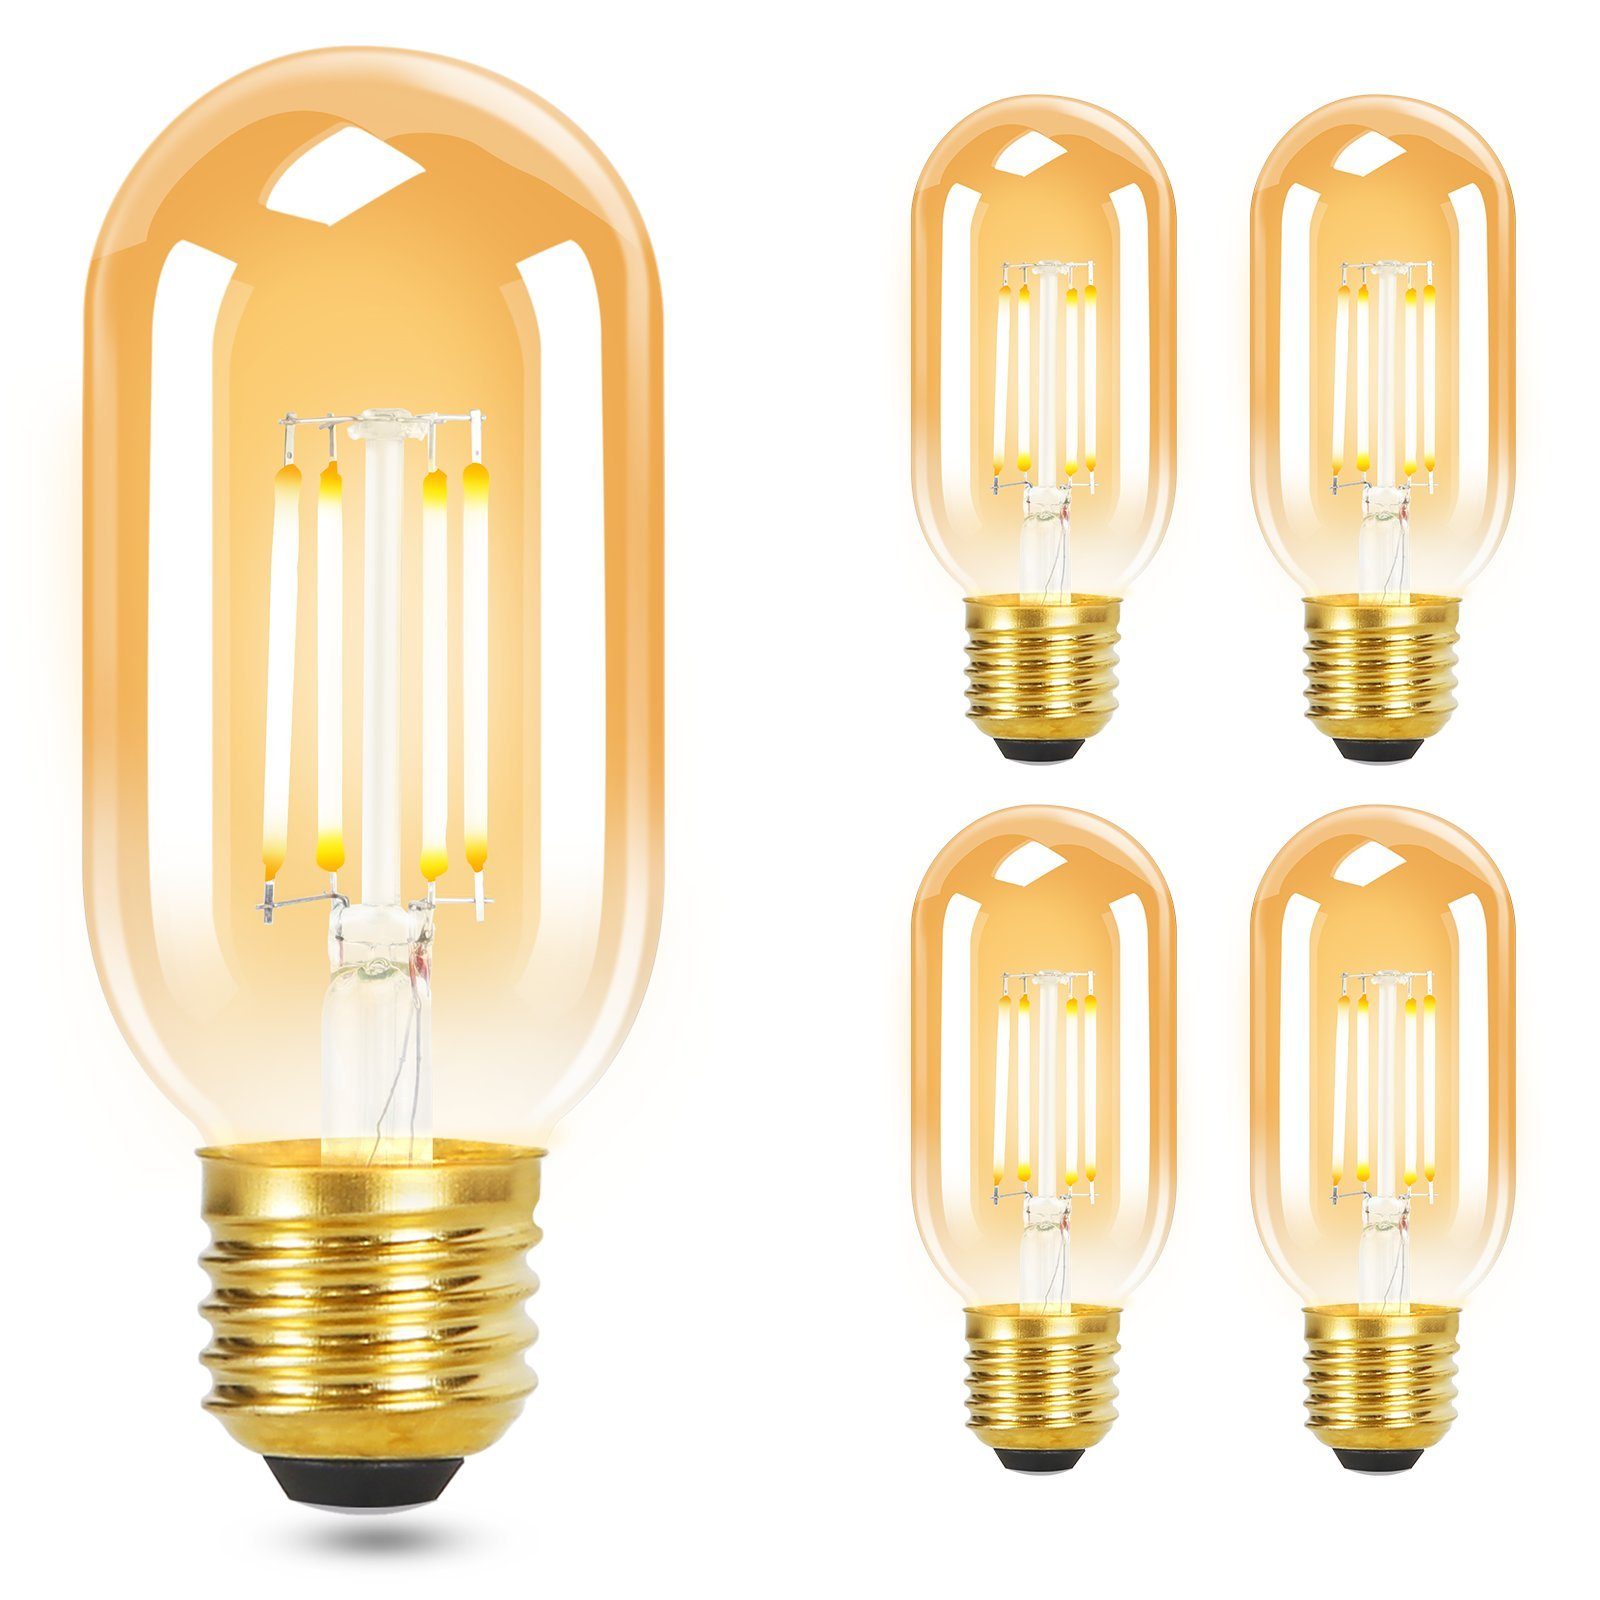 Nettlife LED-Leuchtmittel LED Warmweiss Vintage Glühbirnen T45 Lampe E27 Birnen Edison 4W 2700K, E27, 4 St., Warmweiss Bernsteinfarbene